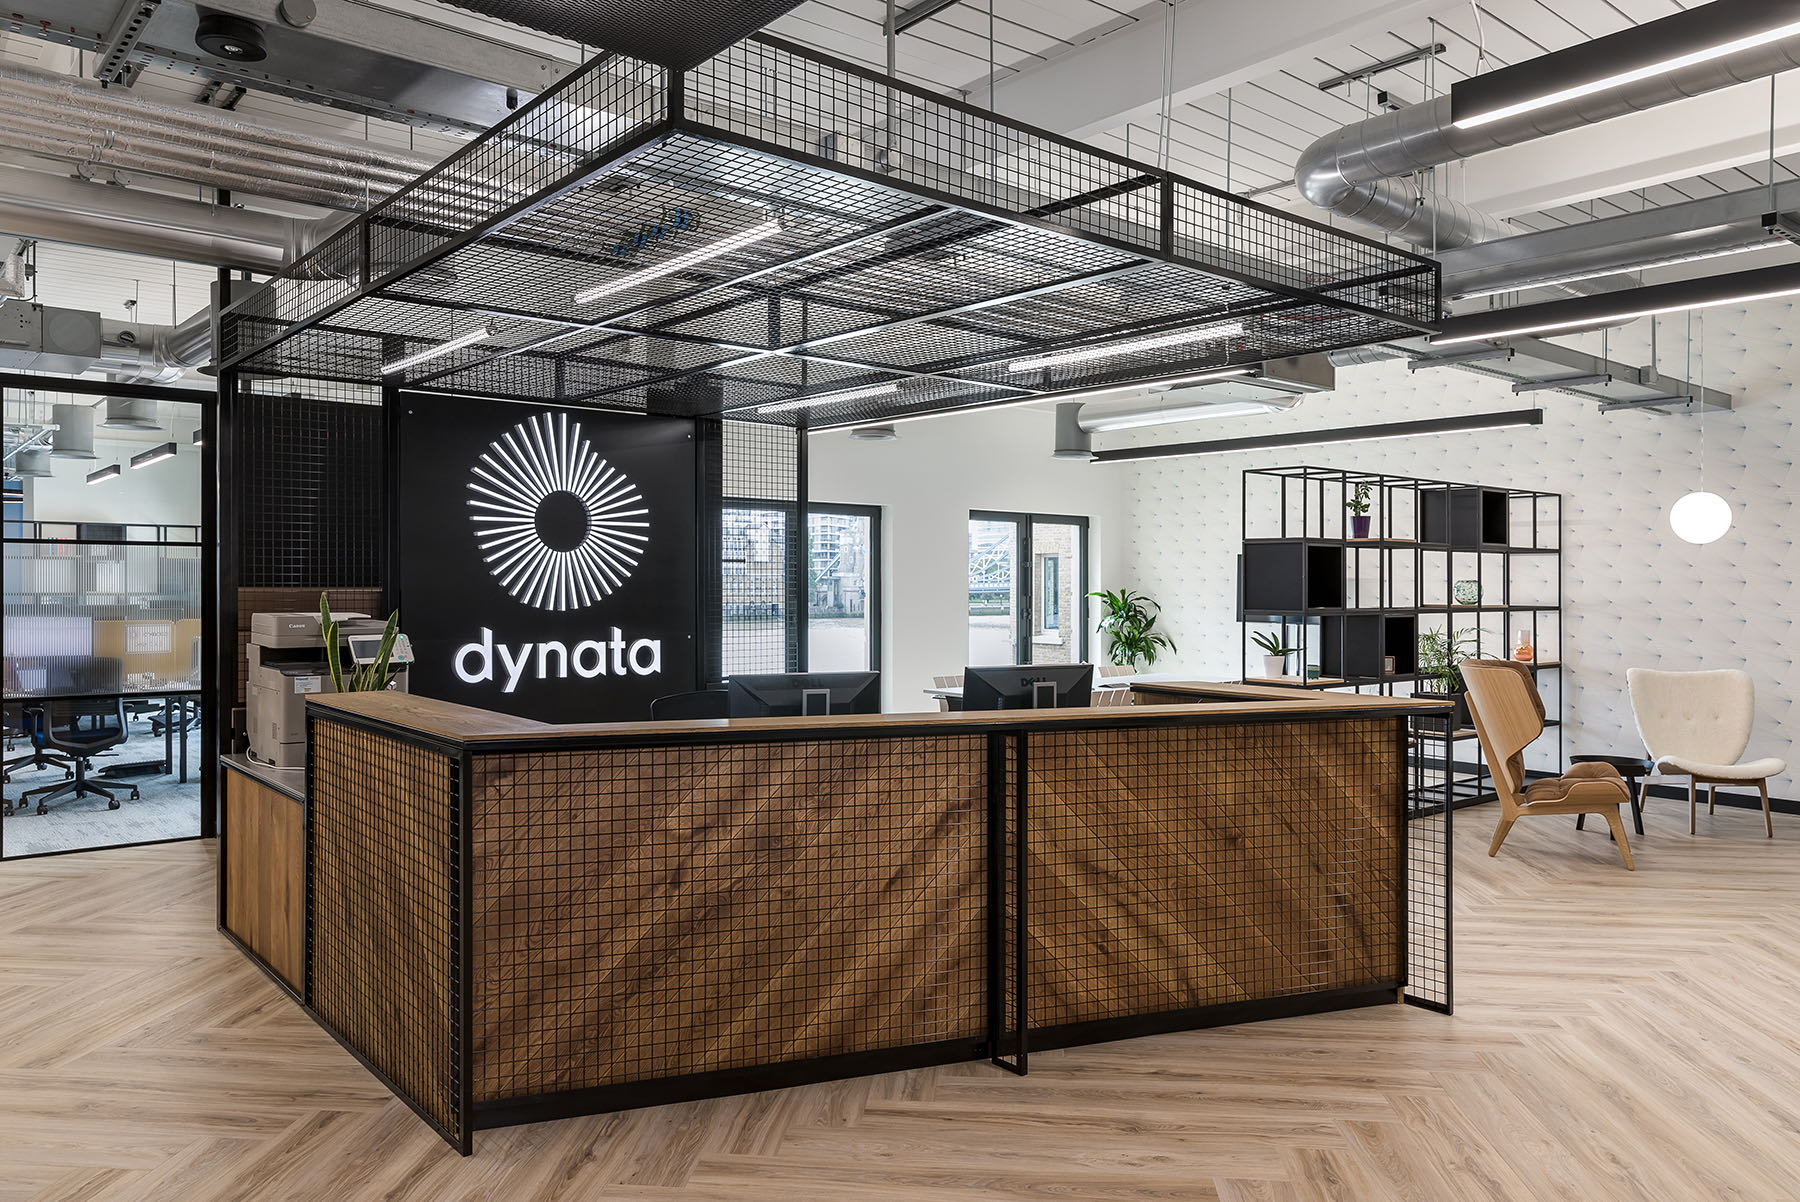 A Tour of Dynata’s Modern London Office